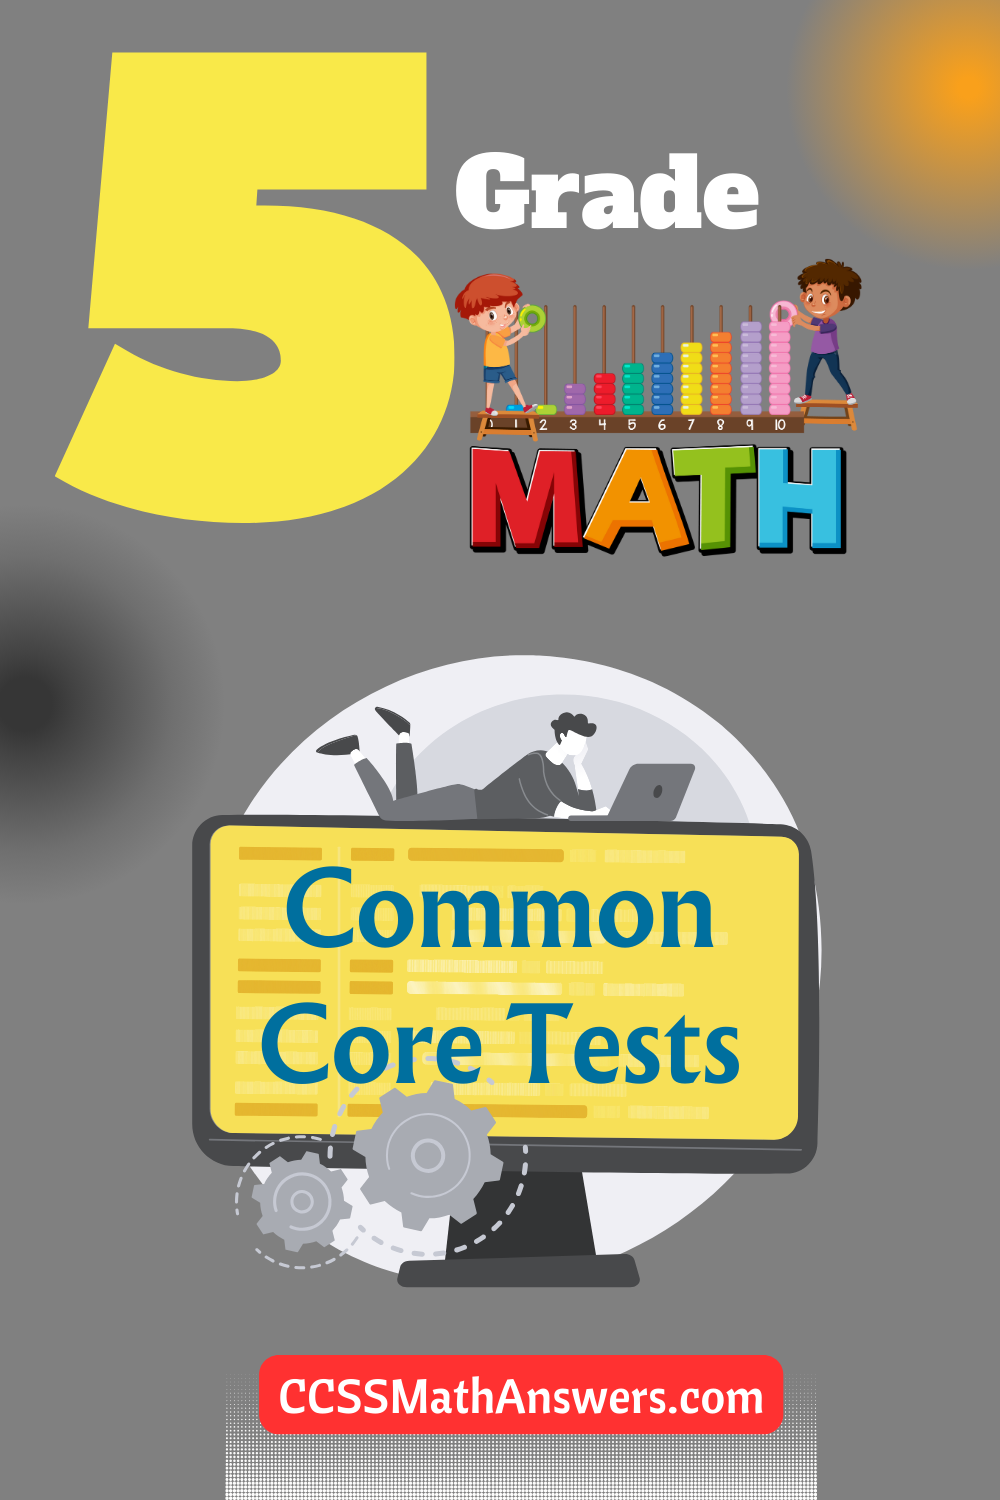 Grade 5 Math Common Core Tests